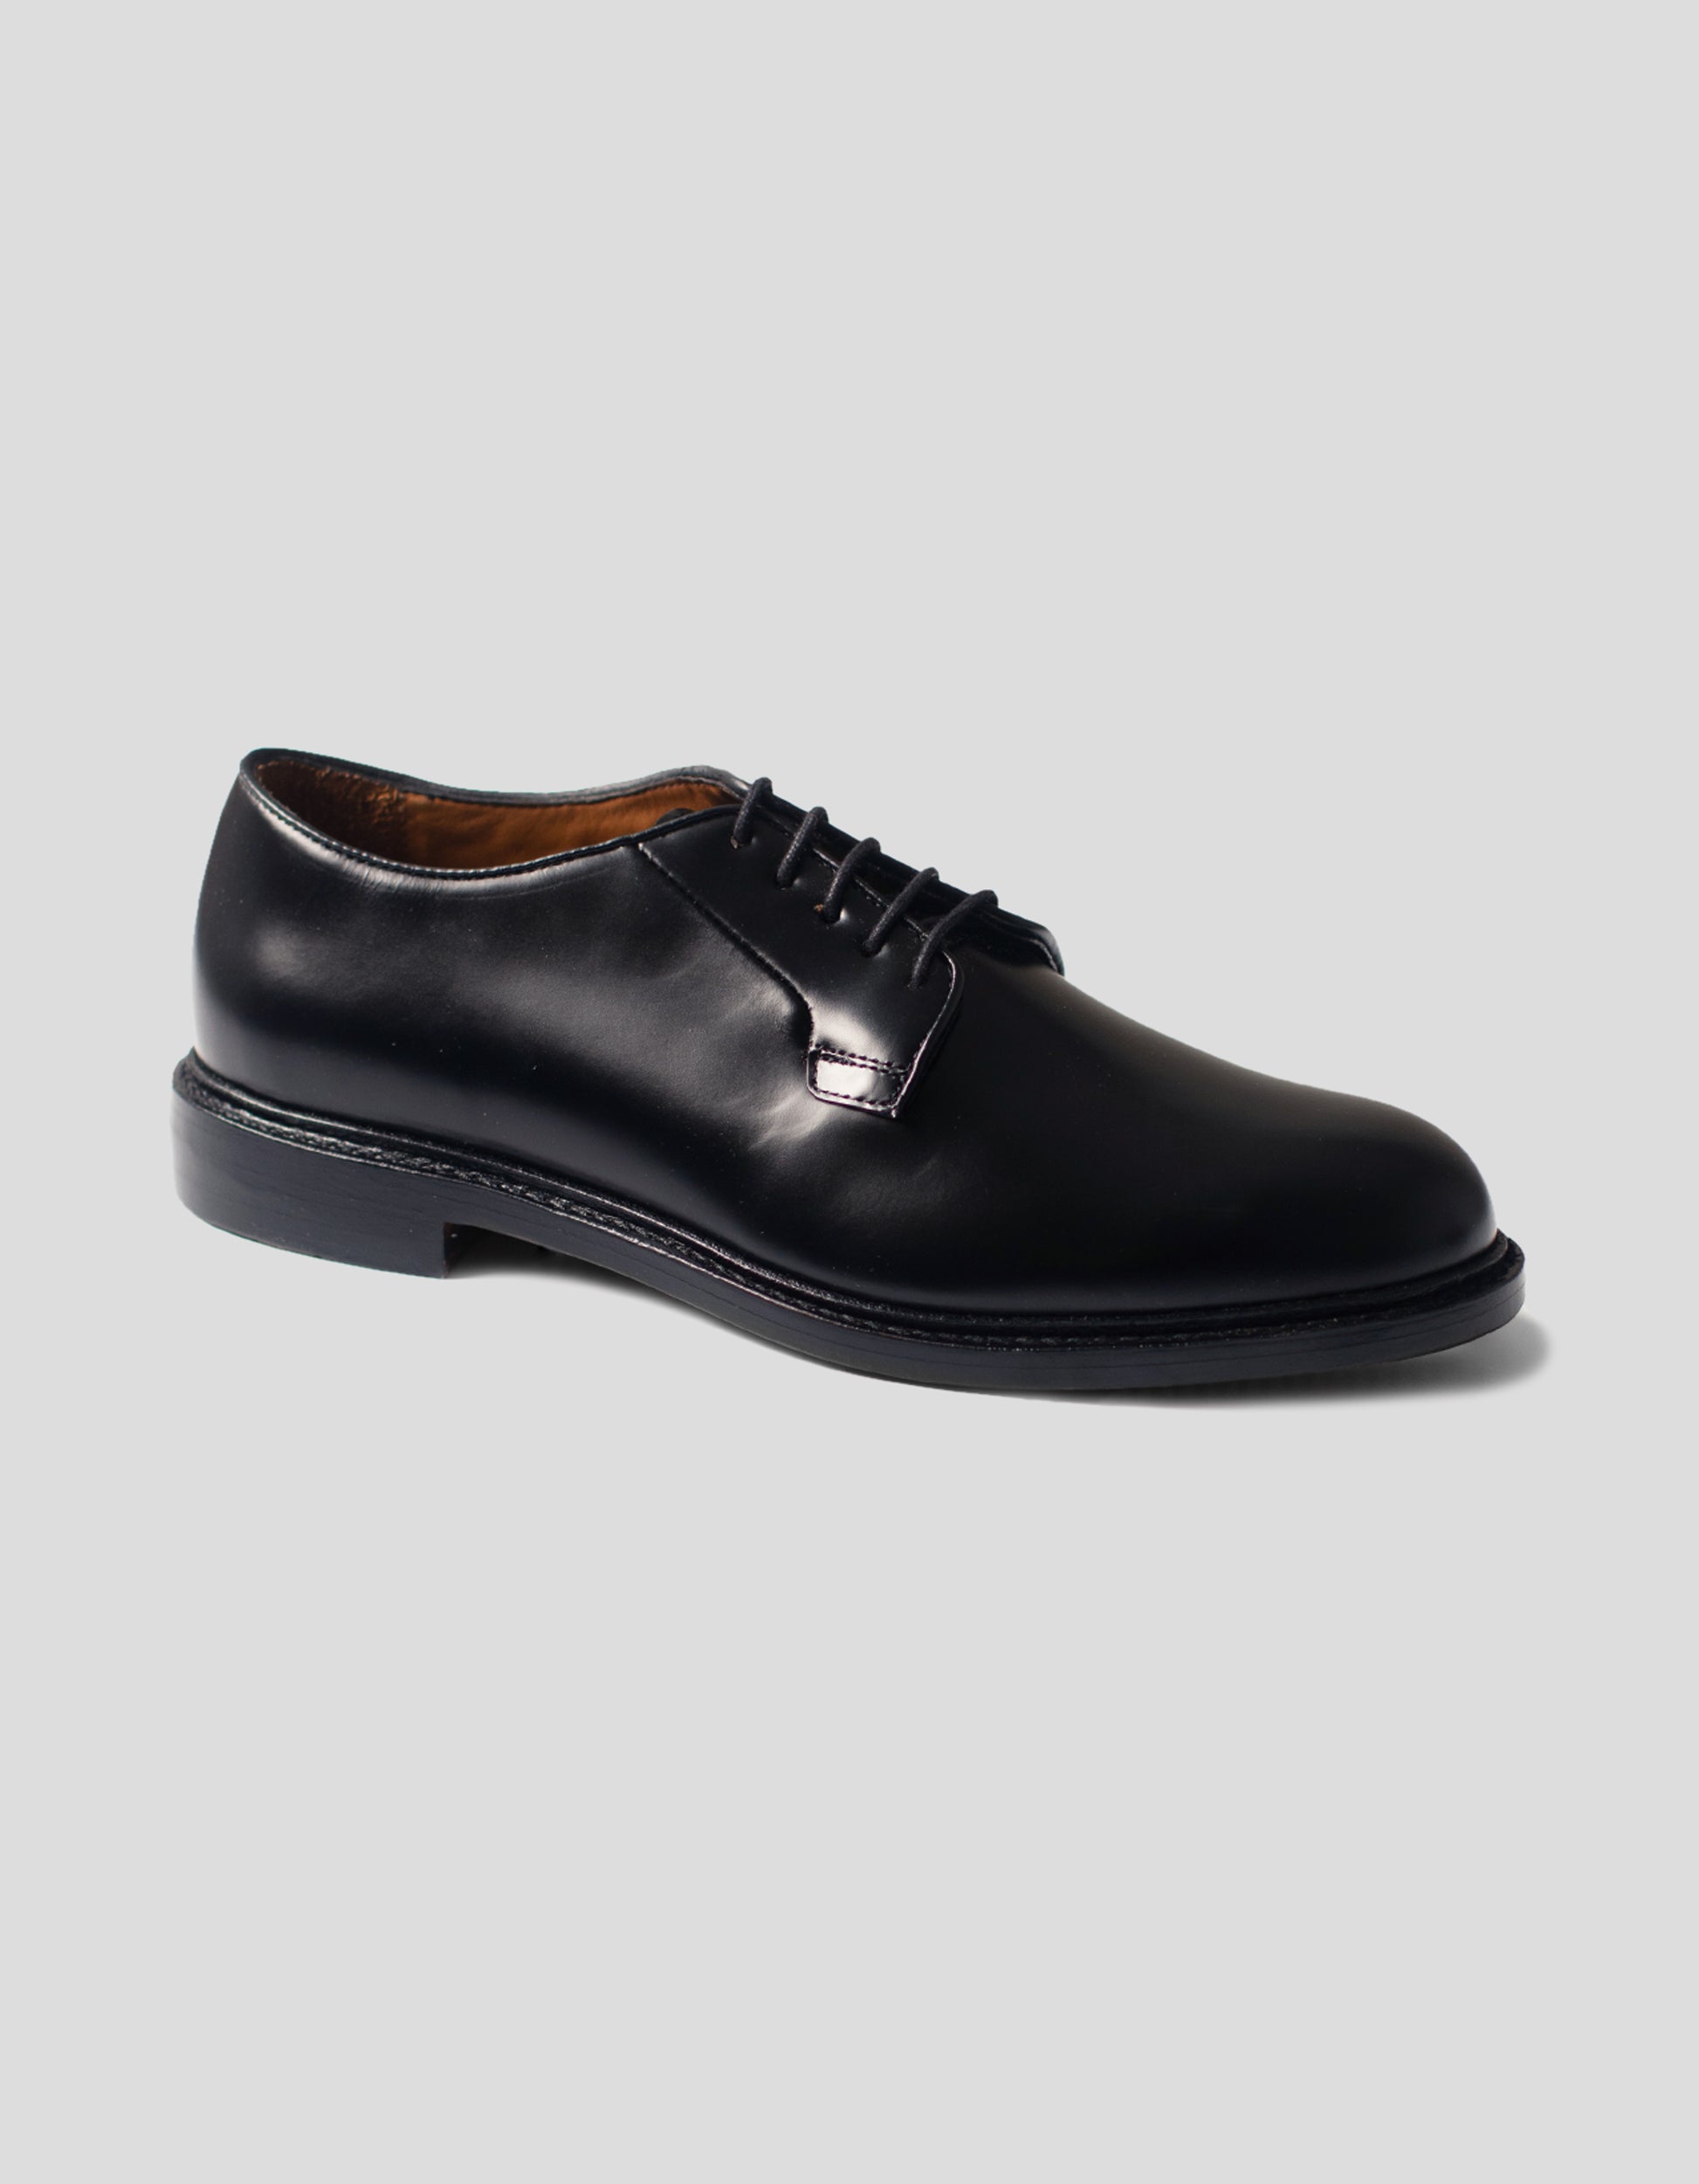 Sebago Black Blucher | Men's Shoes – J. PRESS